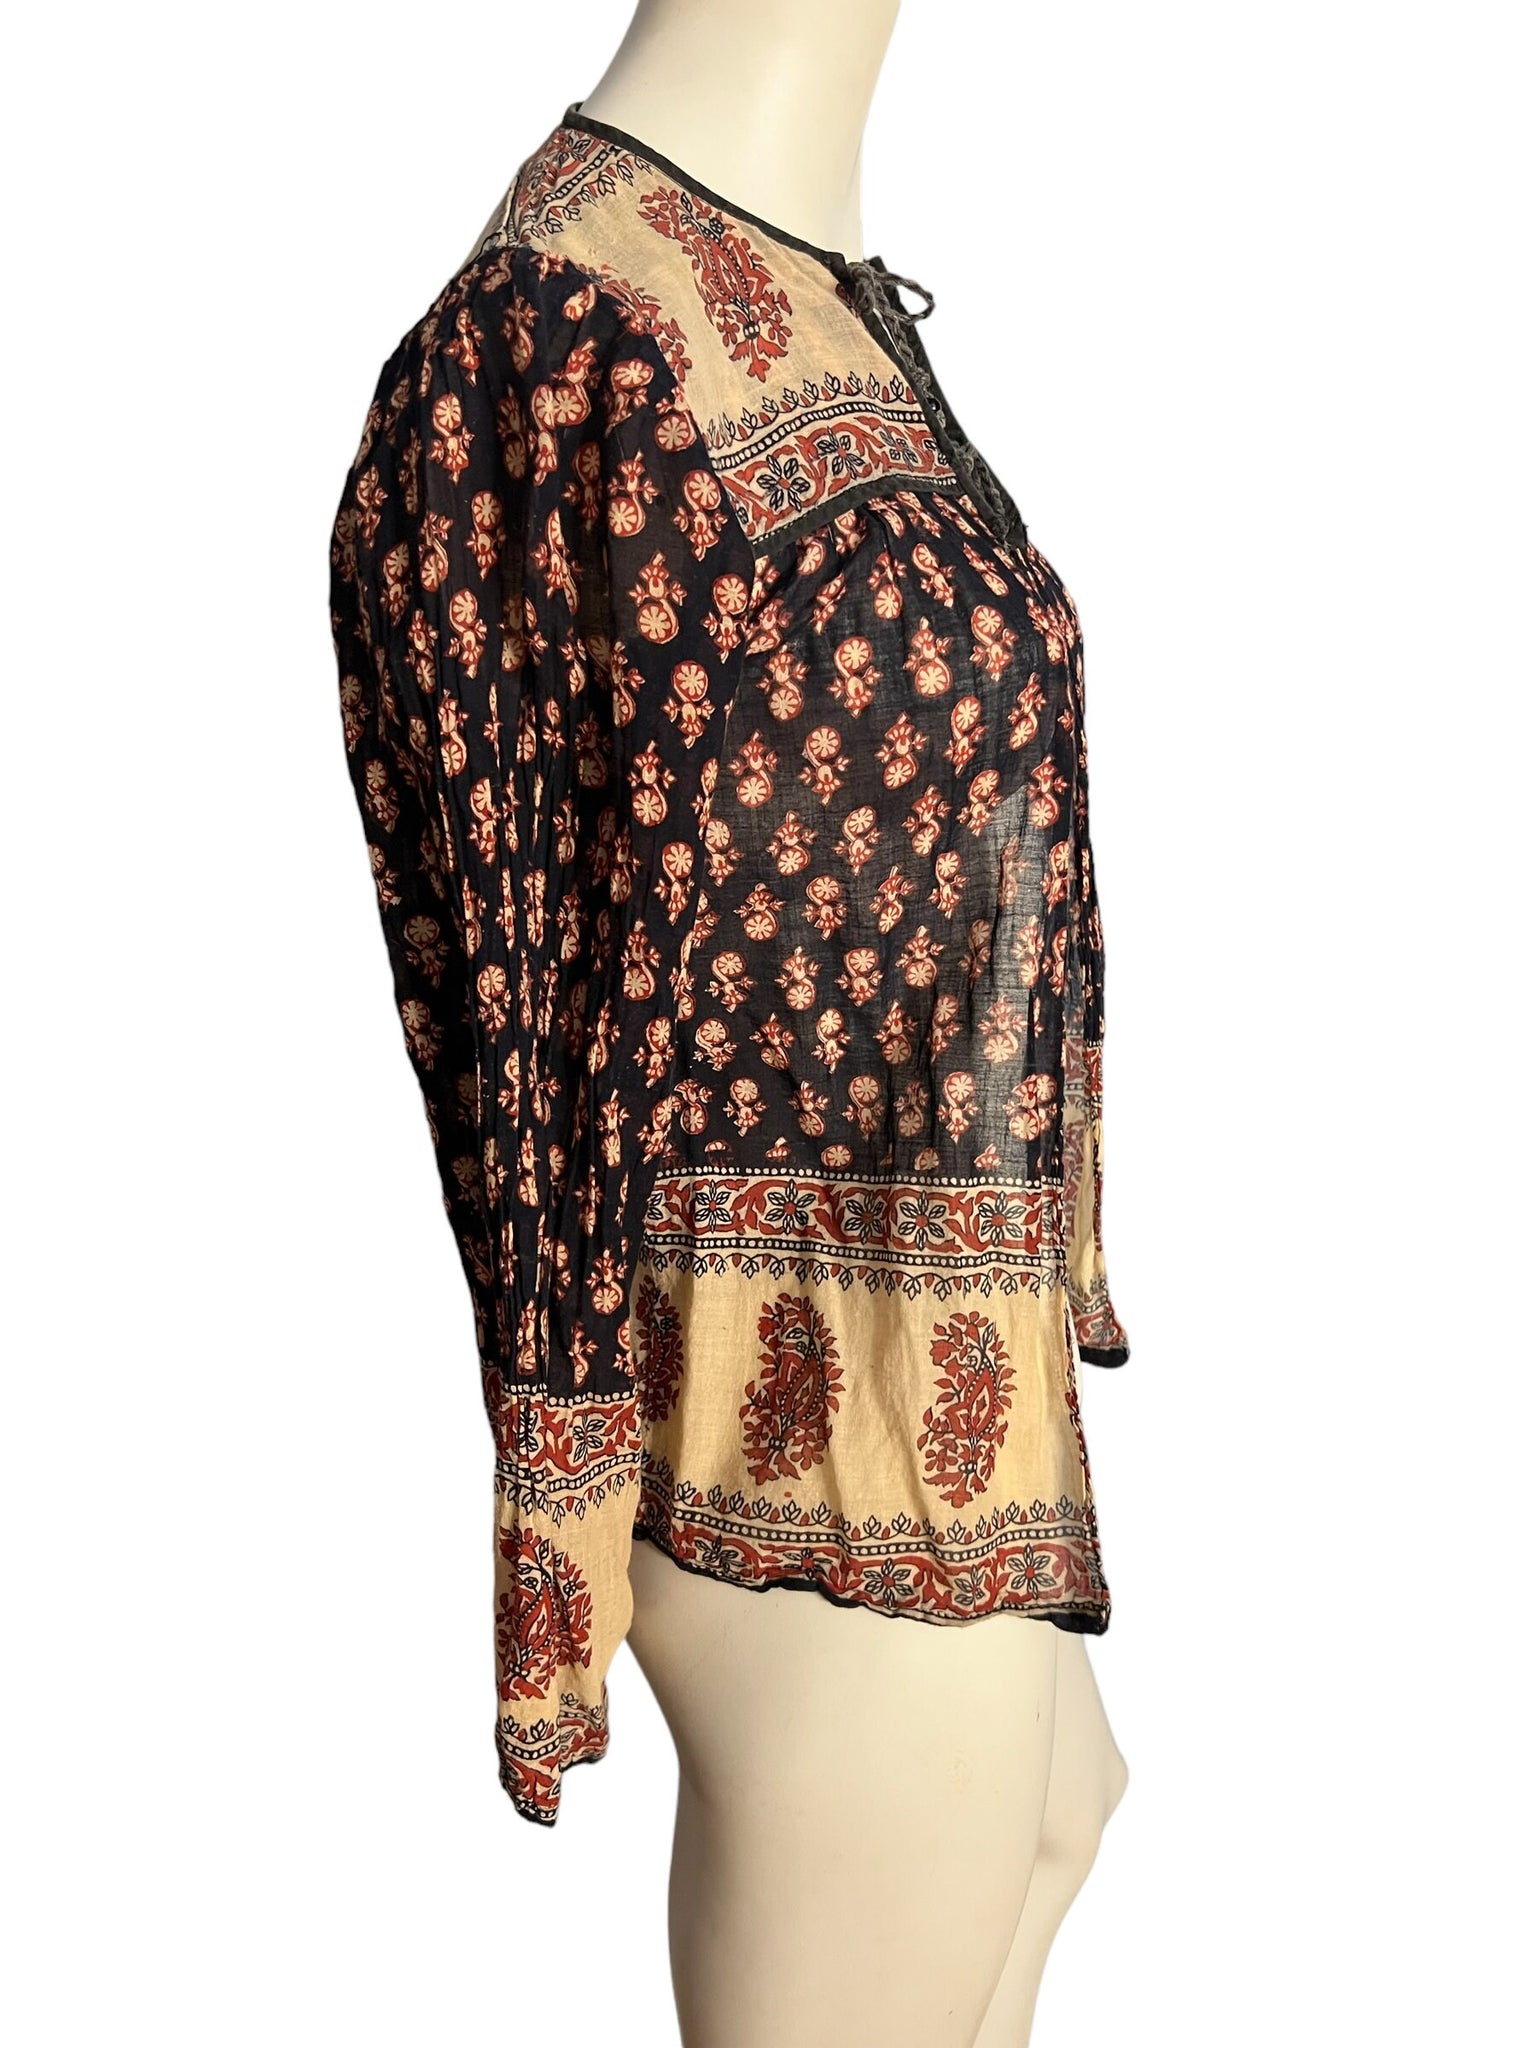 Vintage India 70's boho top jacket M